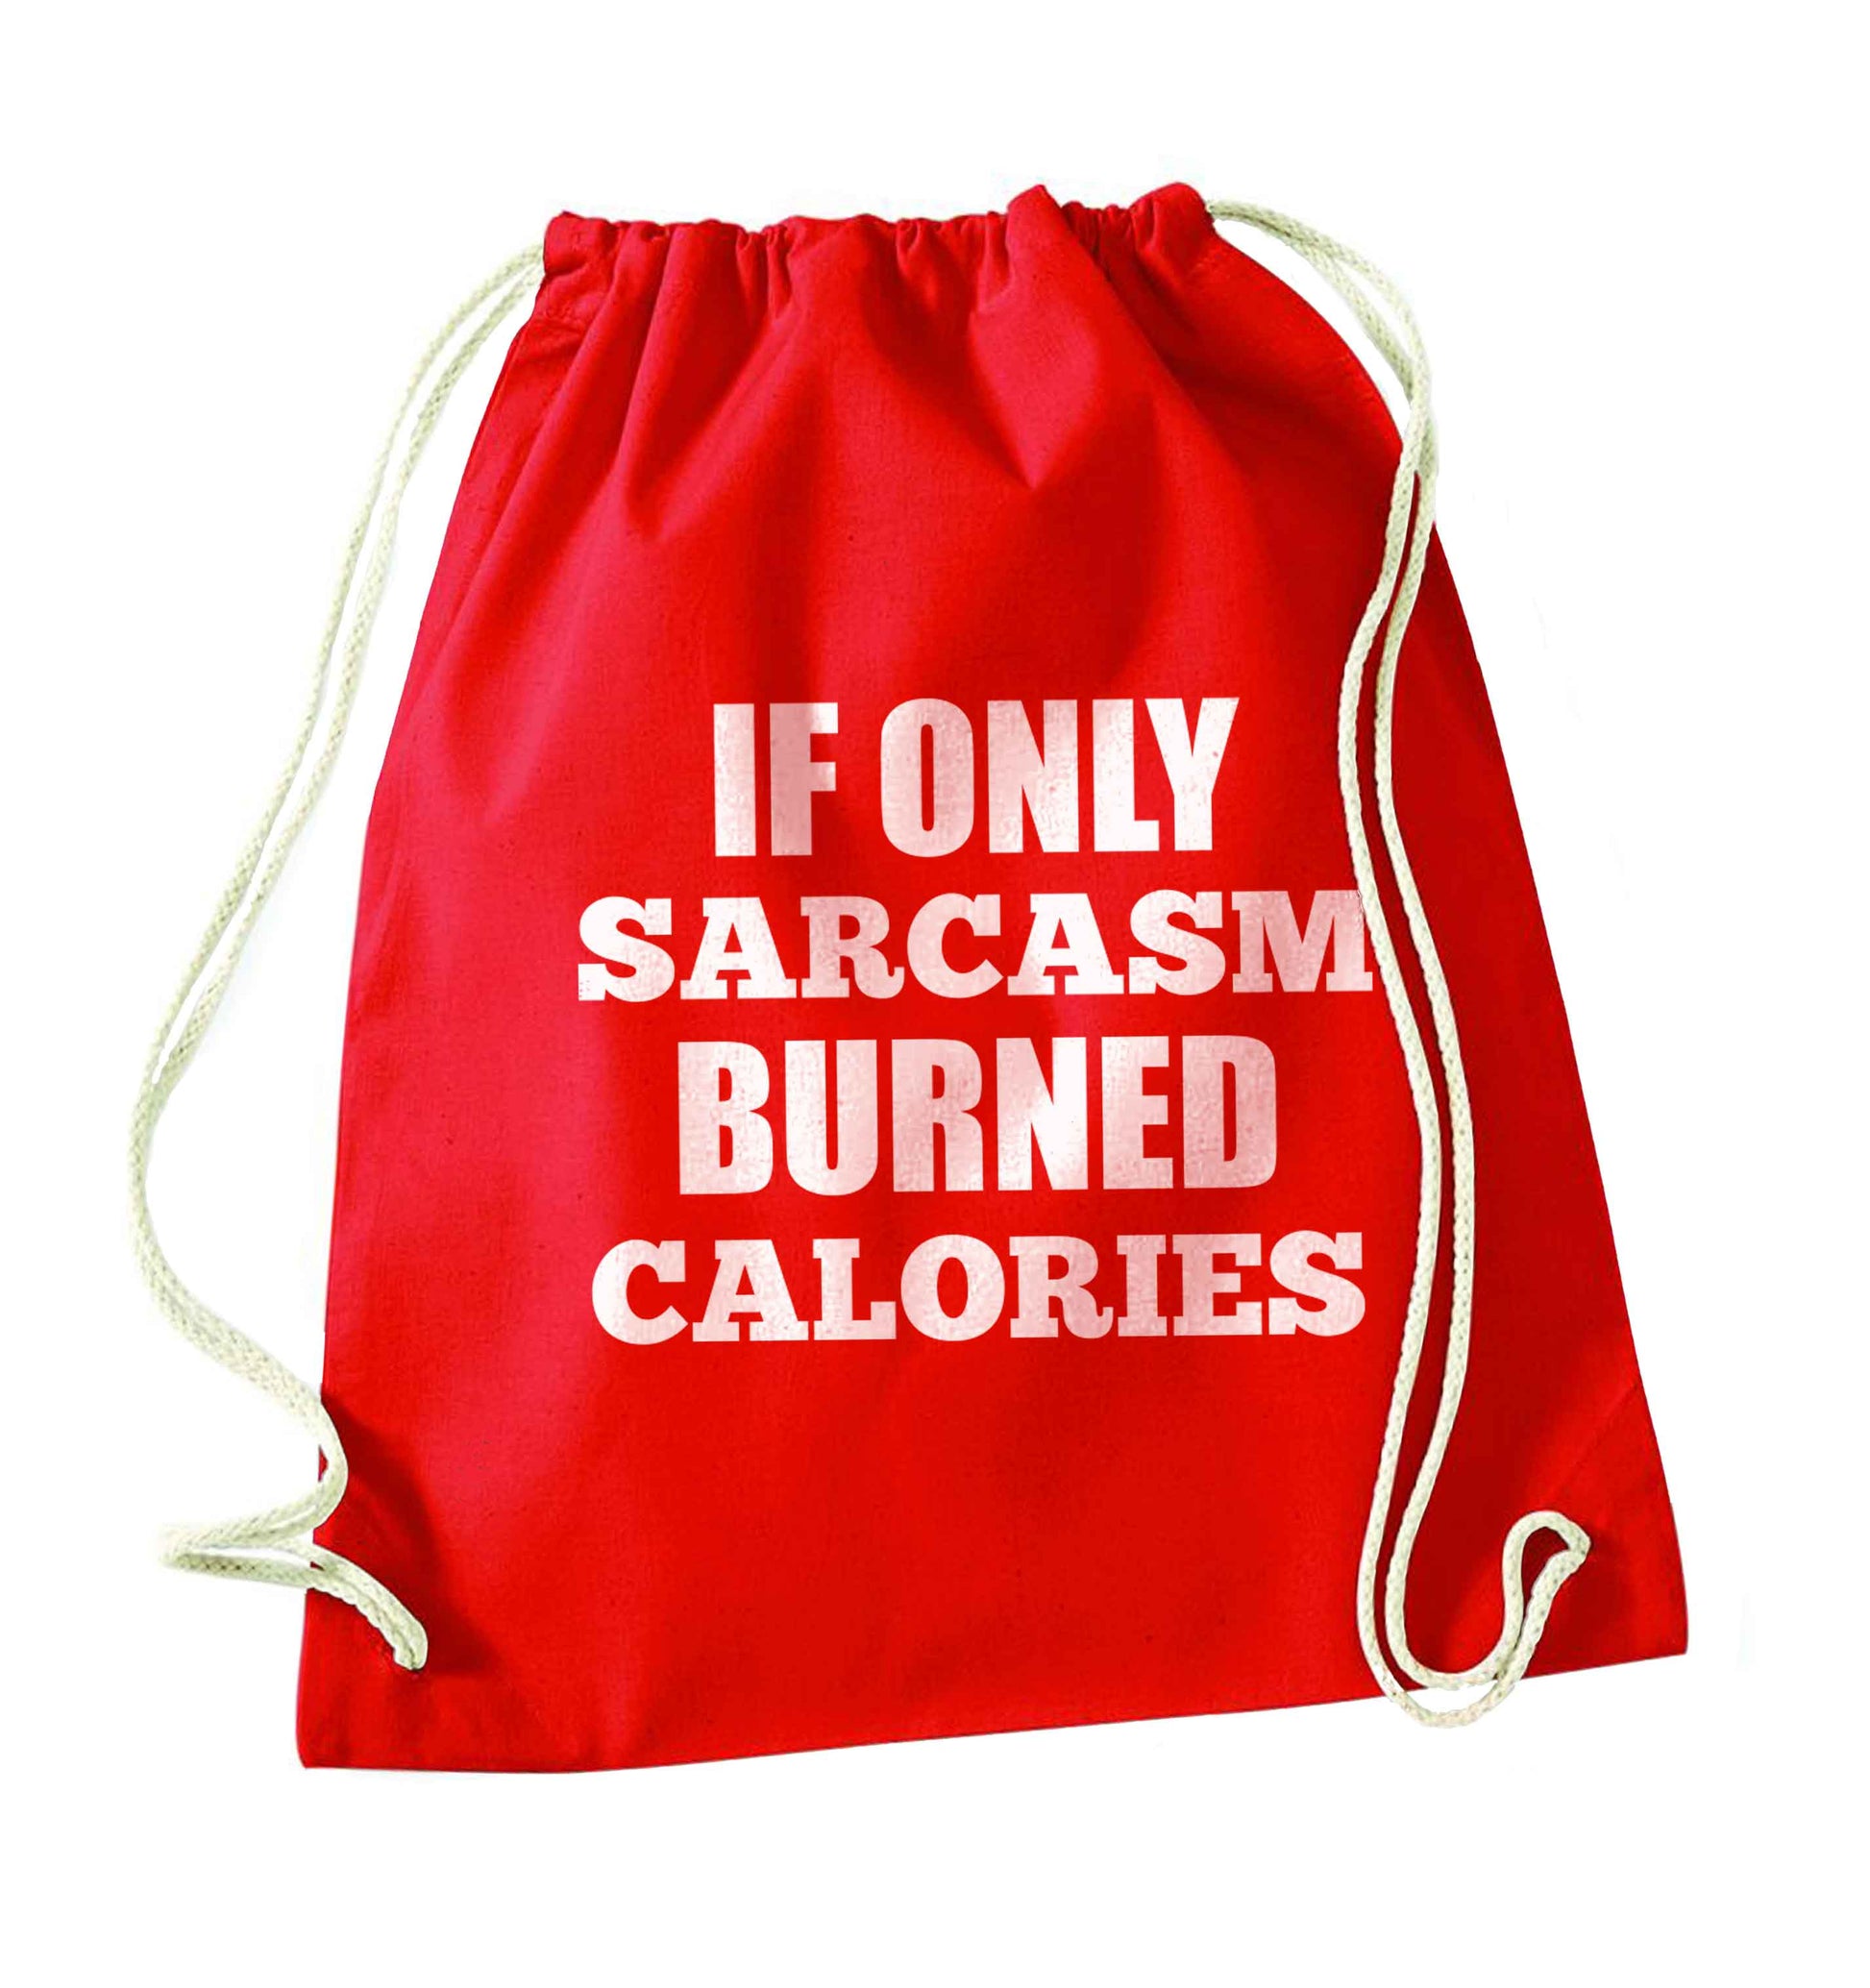 If only sarcasm burned calories red drawstring bag 